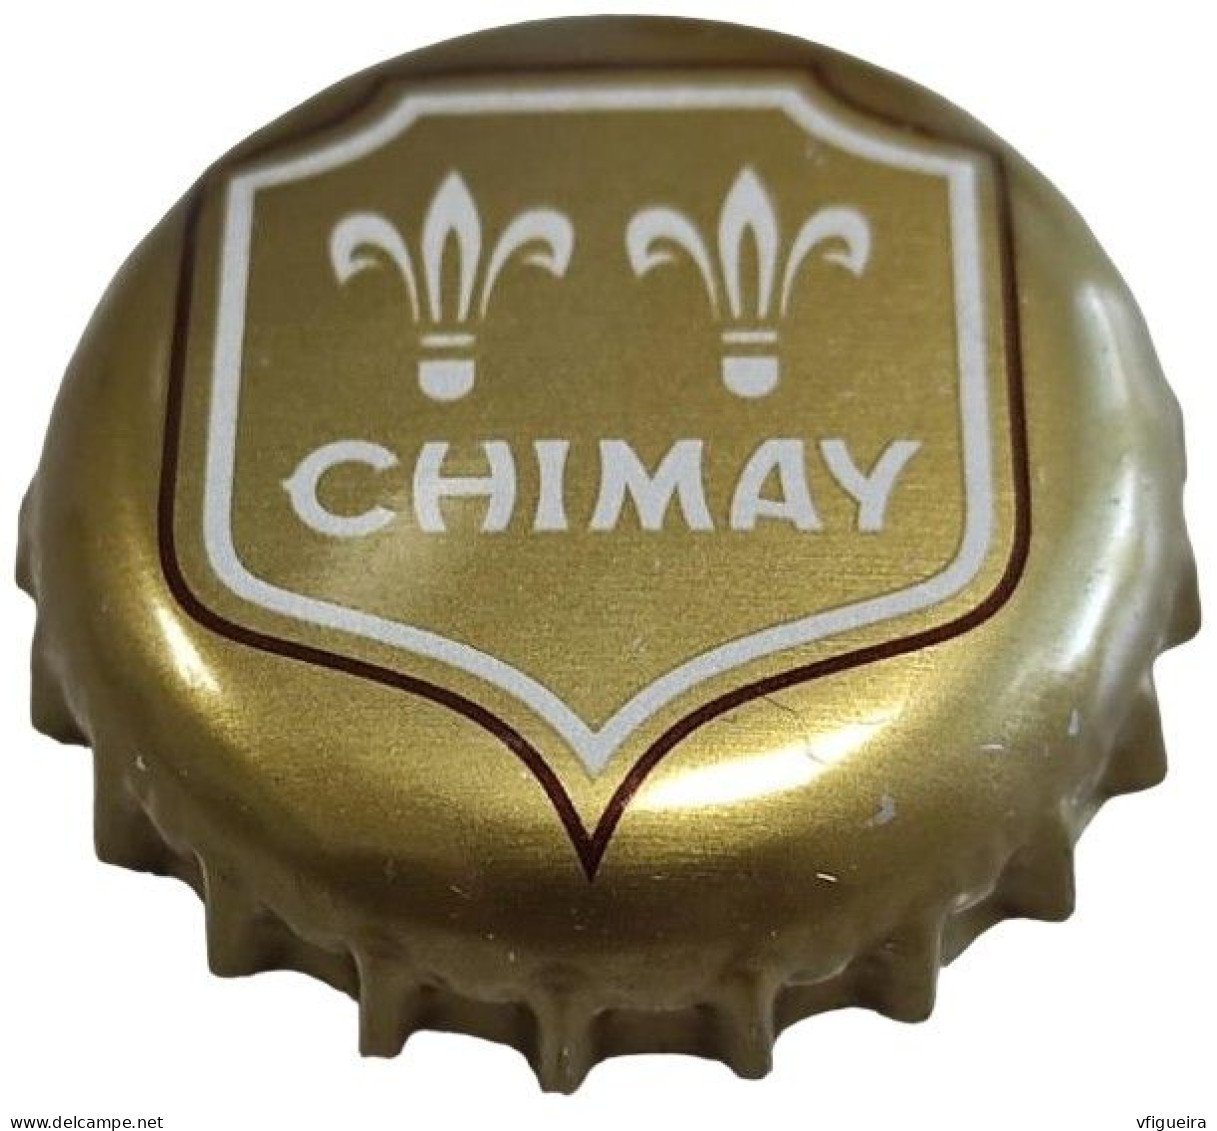 Belgique Capsule Bière Beer Crown Cap Chimay Blonde Dorée - Soda